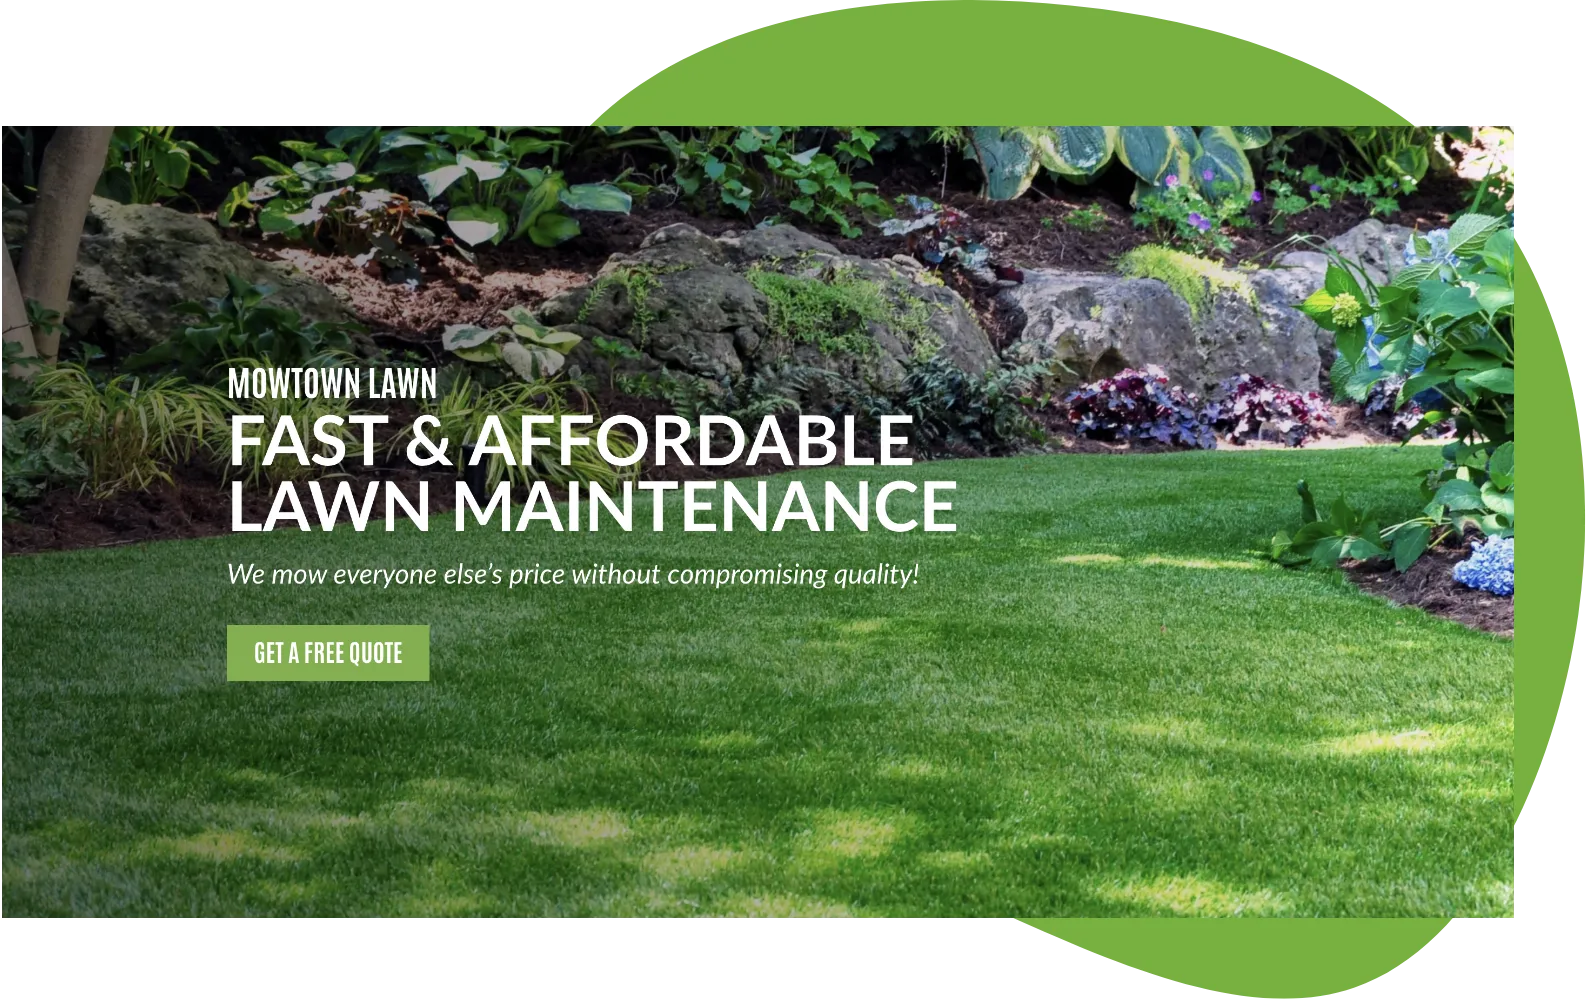 Lawn Maintenance Business